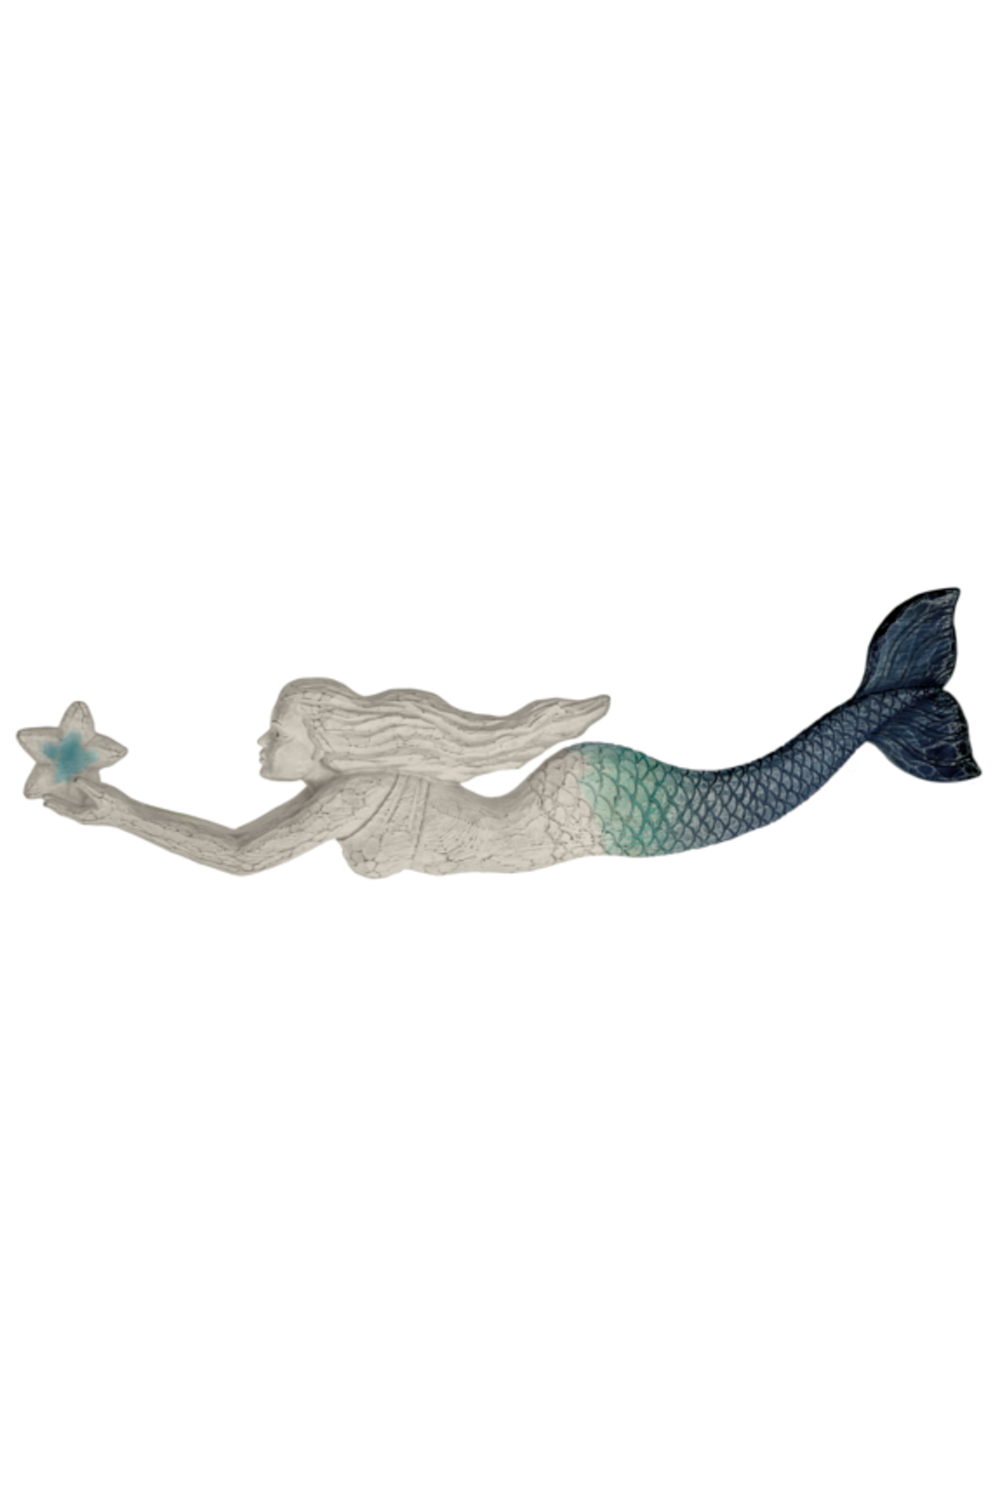 Blue Ombre Mermaid Figure